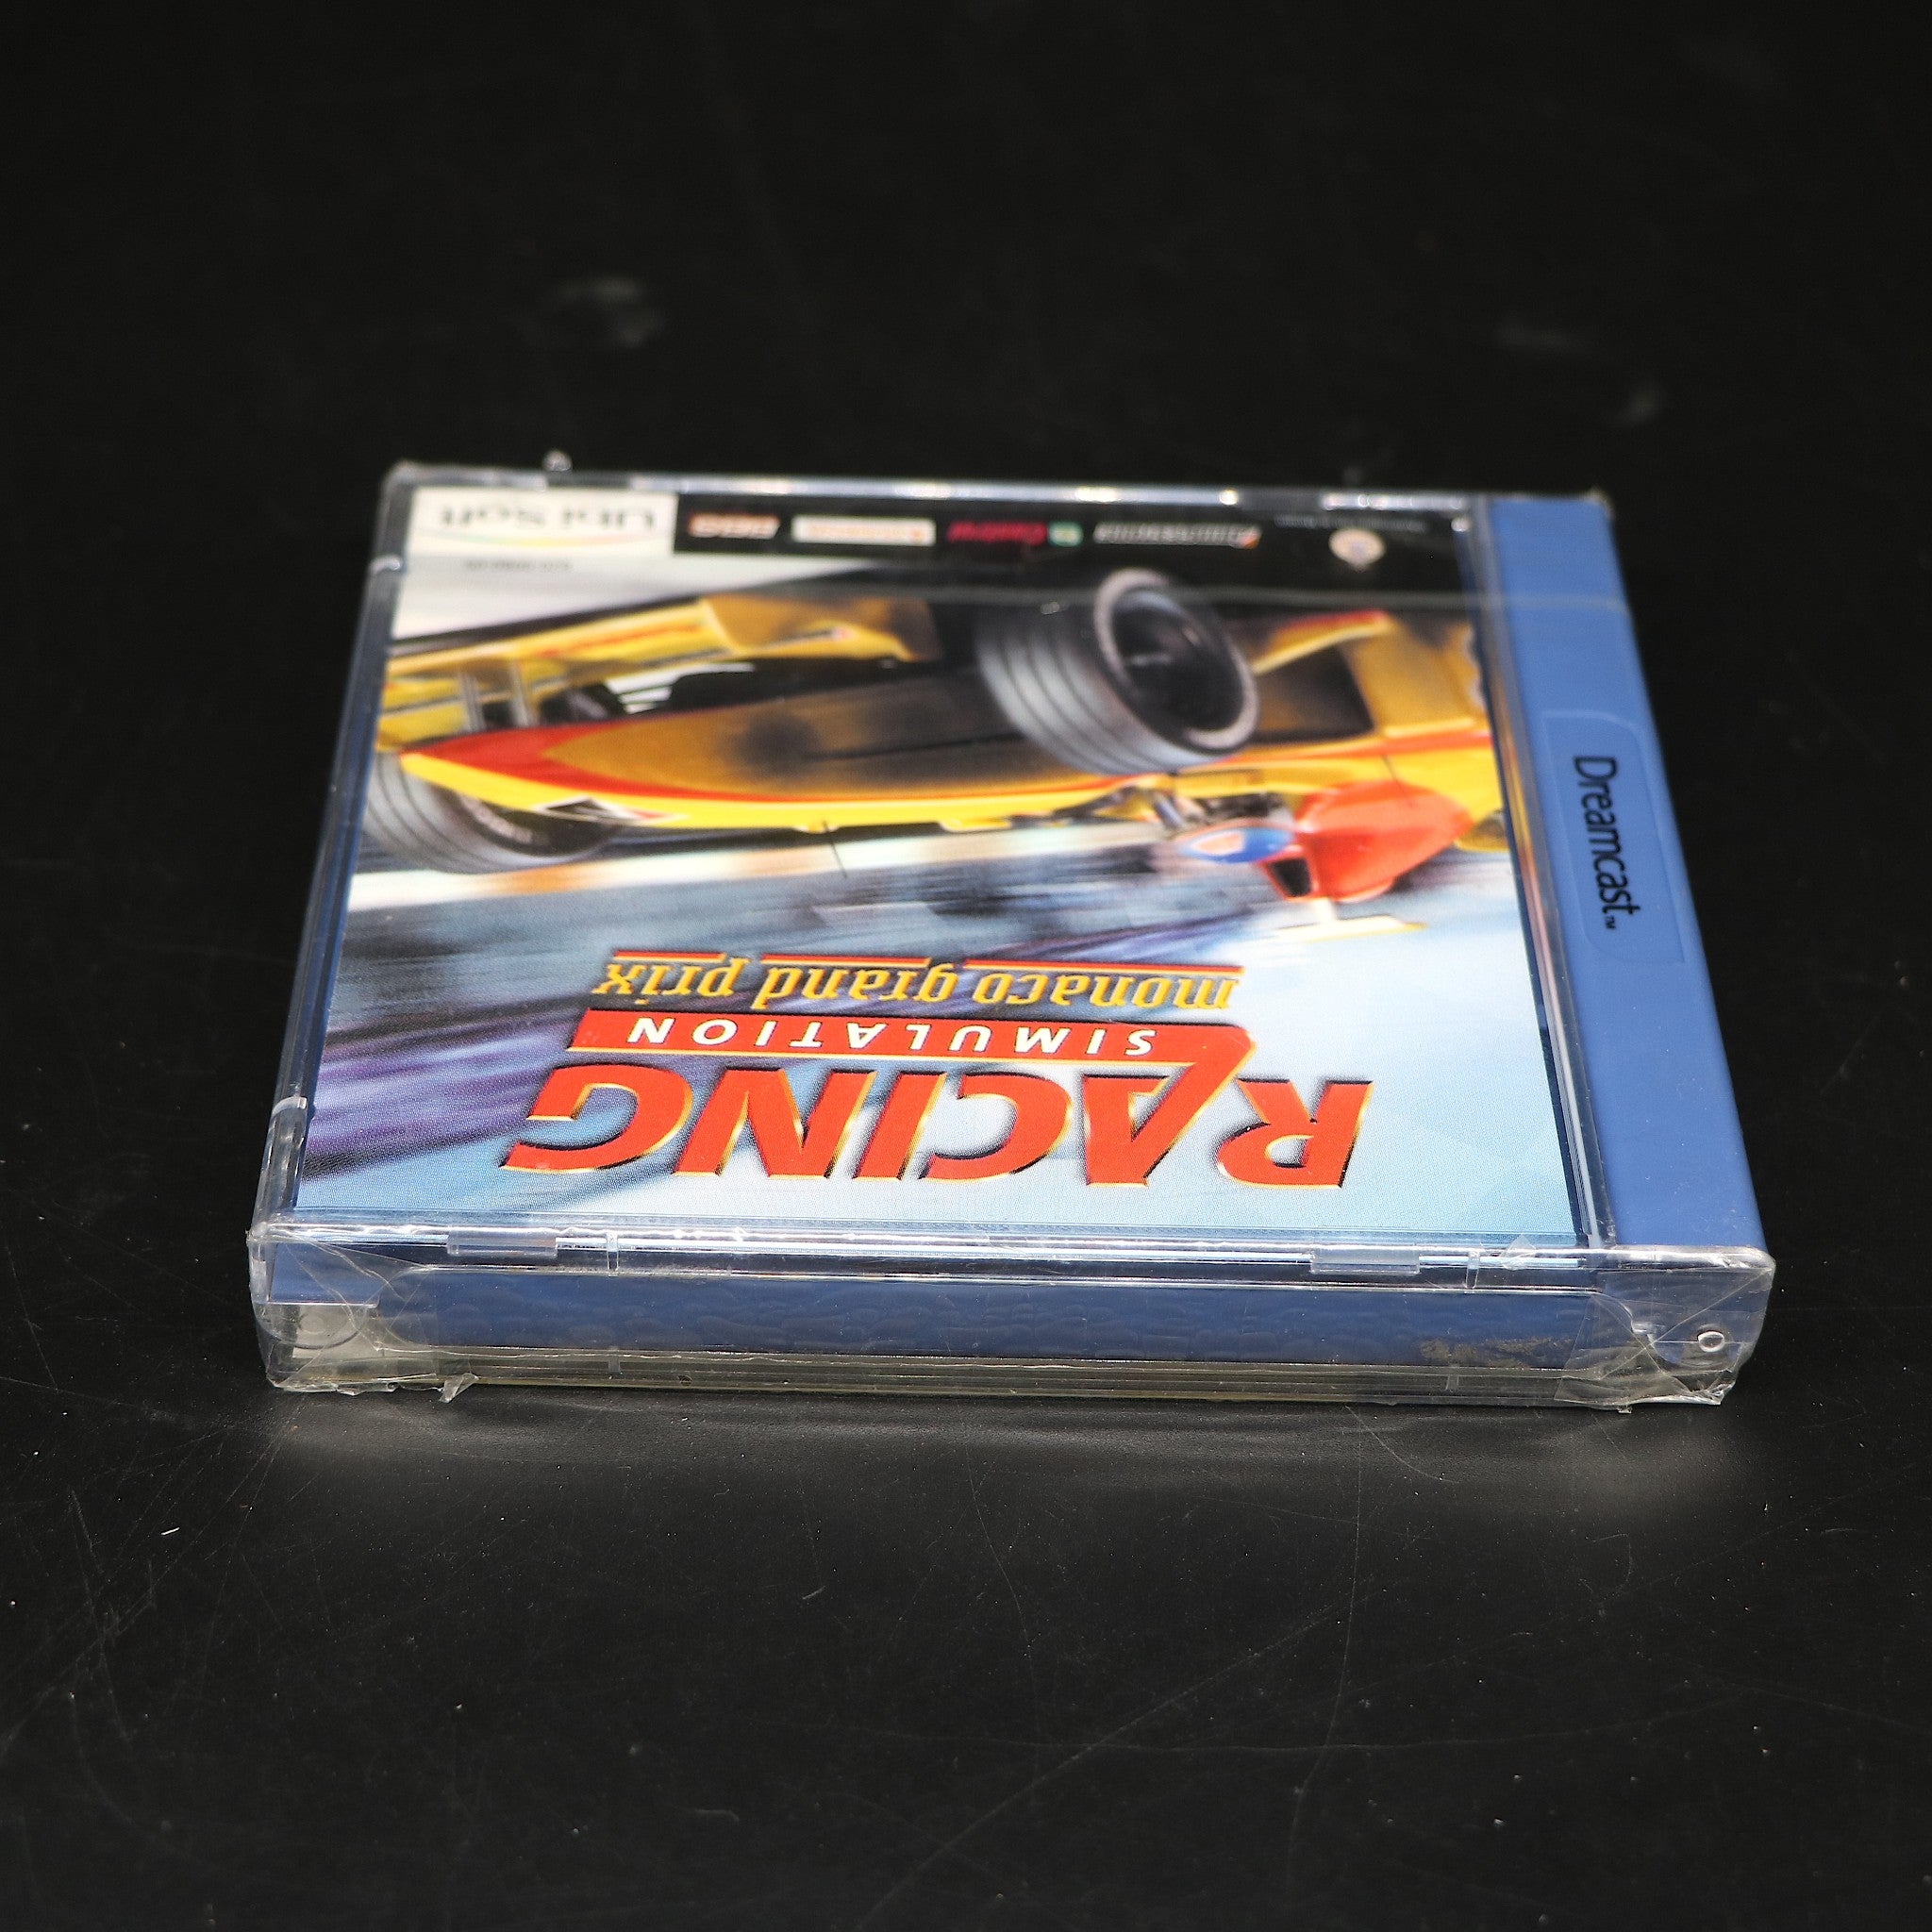 Racing Simulation | Monaco Grand Prix | Sega Dreamcast Game | New & Sealed